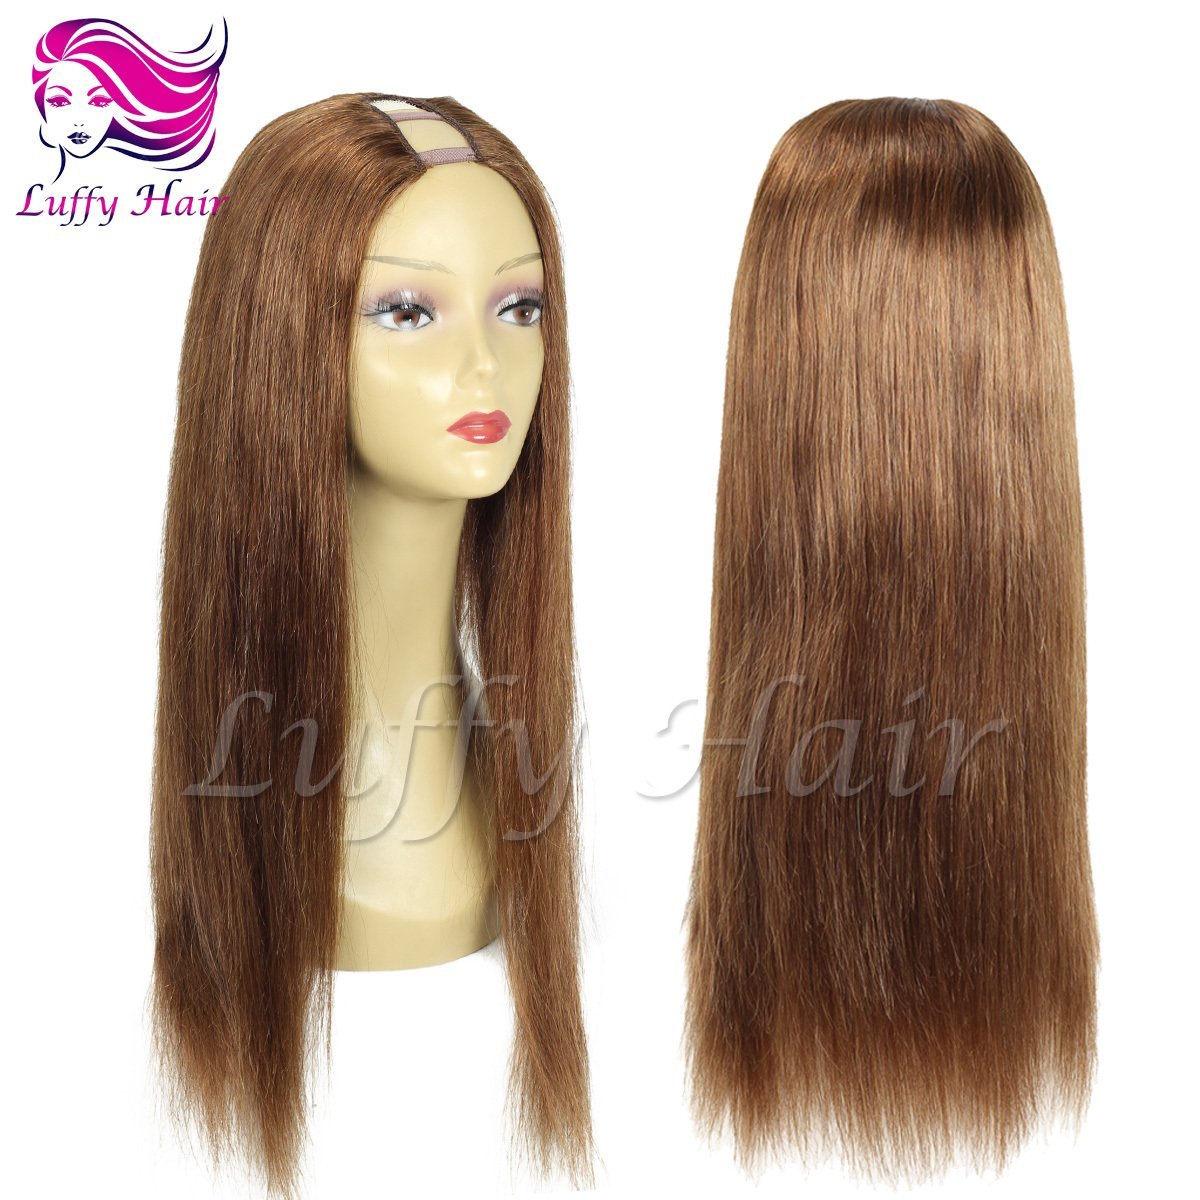 8A Virgin Human Hair Color #6 Silky Straight U Part Wig - KWU067